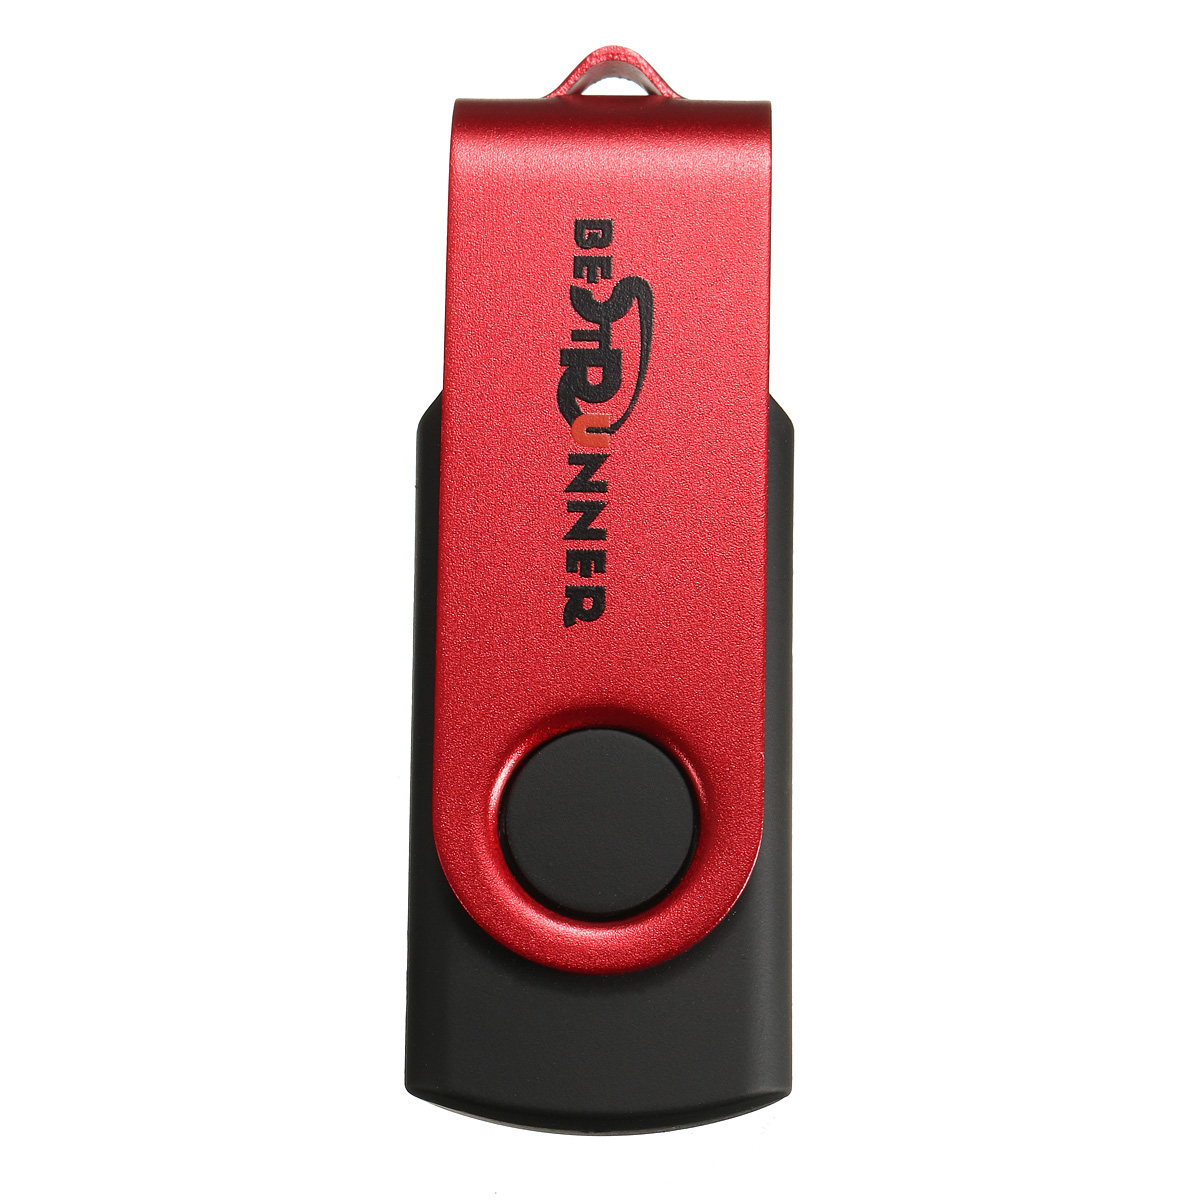 Bestrunner-2GB-USB-20-360deg-Rotation-High-Speed-Flash-Drive-Thumb-Memory-U-Disk-1783060-5